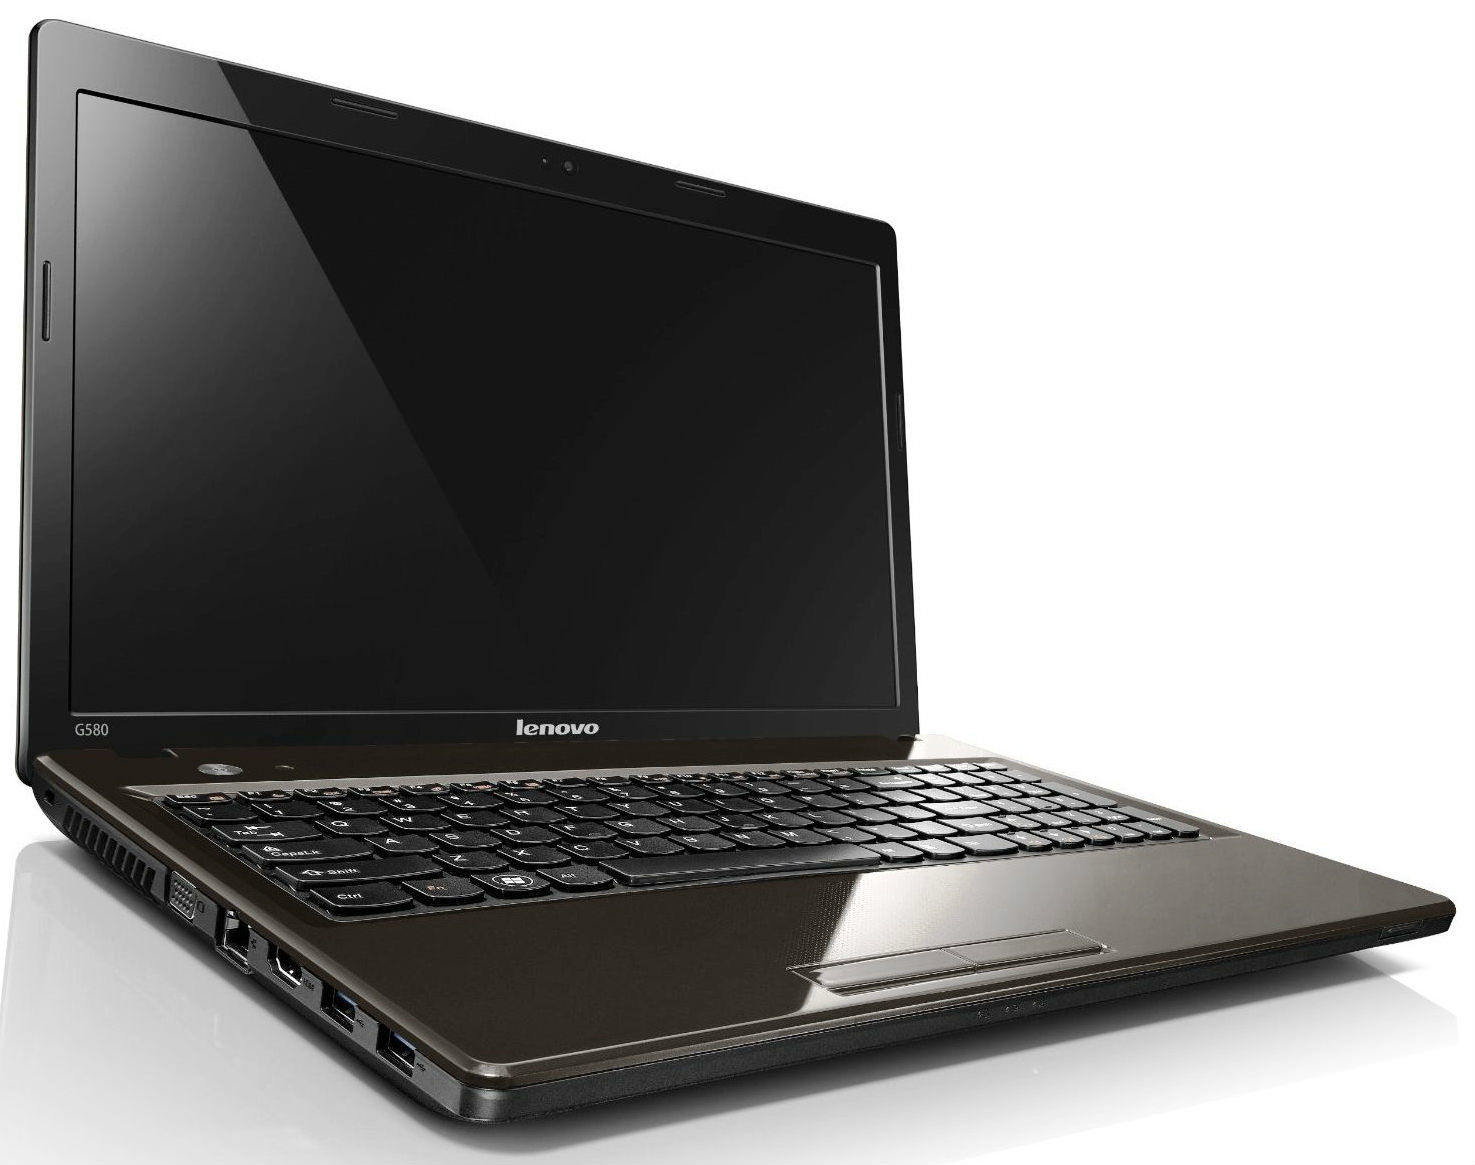 Lenovo essential G580 (59-356384) Laptop (Core i3 3rd Gen/2 GB/500 GB/Windows 8) Price